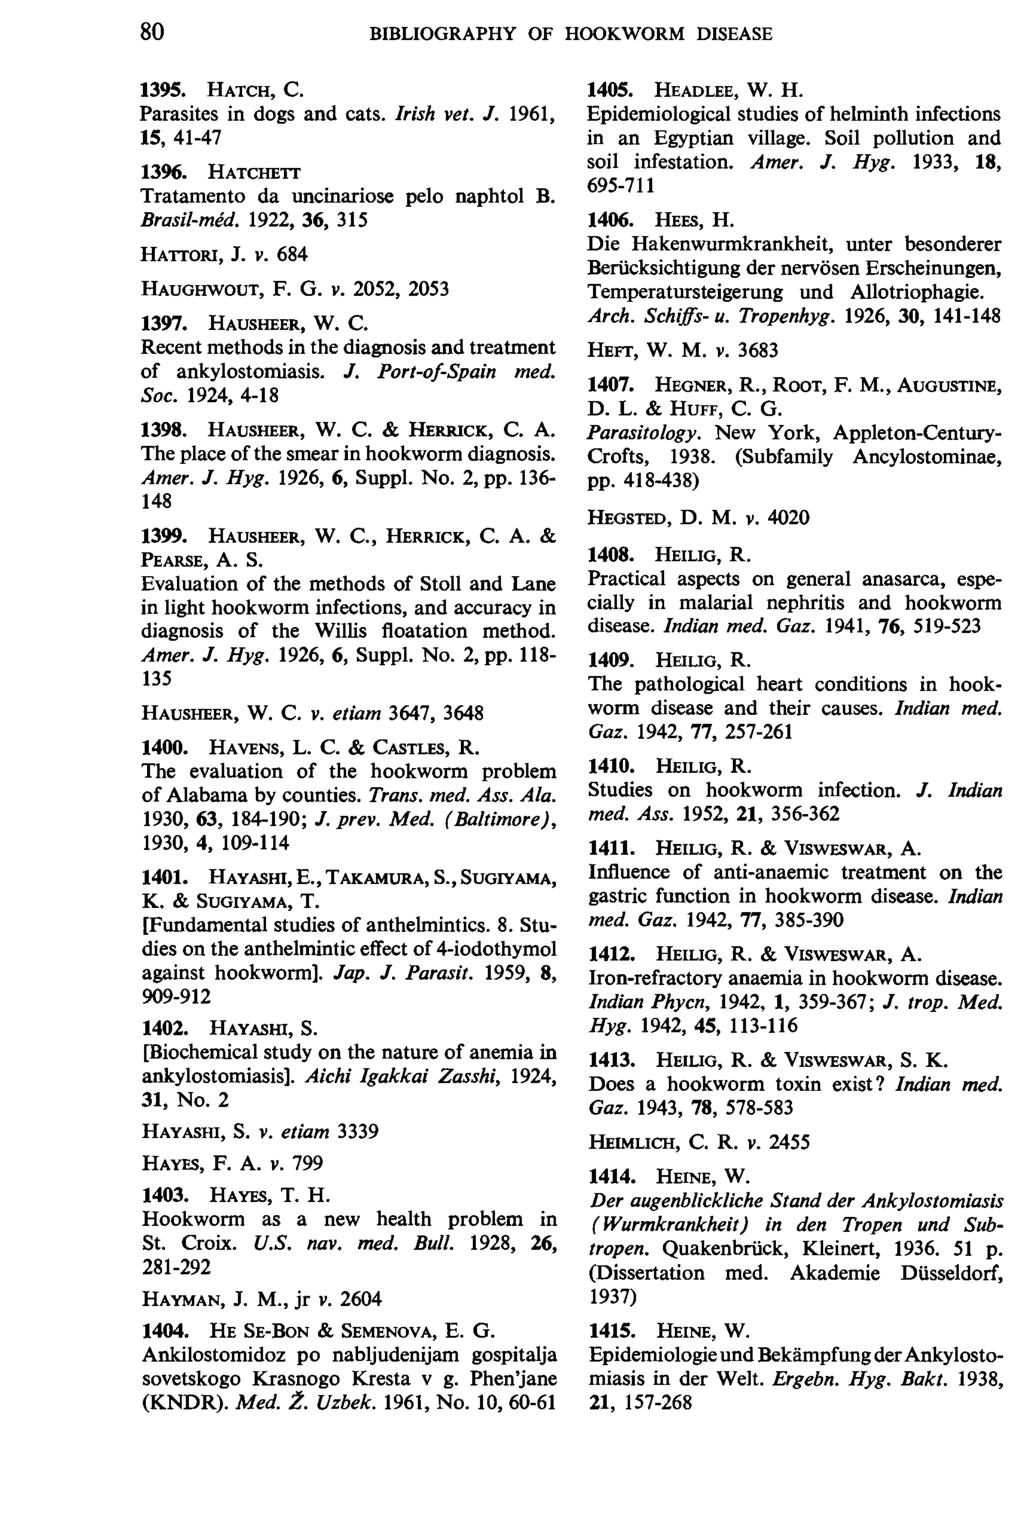 80 BIBLIOGRAPHY OF HOOKWORM DISEASE 1395. HATCH, C. Parasites in dogs and cats. Irish vet. J. 1961, 15, 41-47 1396. HATCHETT Tratamento da uncinariose pelo naphtol B. Brasil-med.